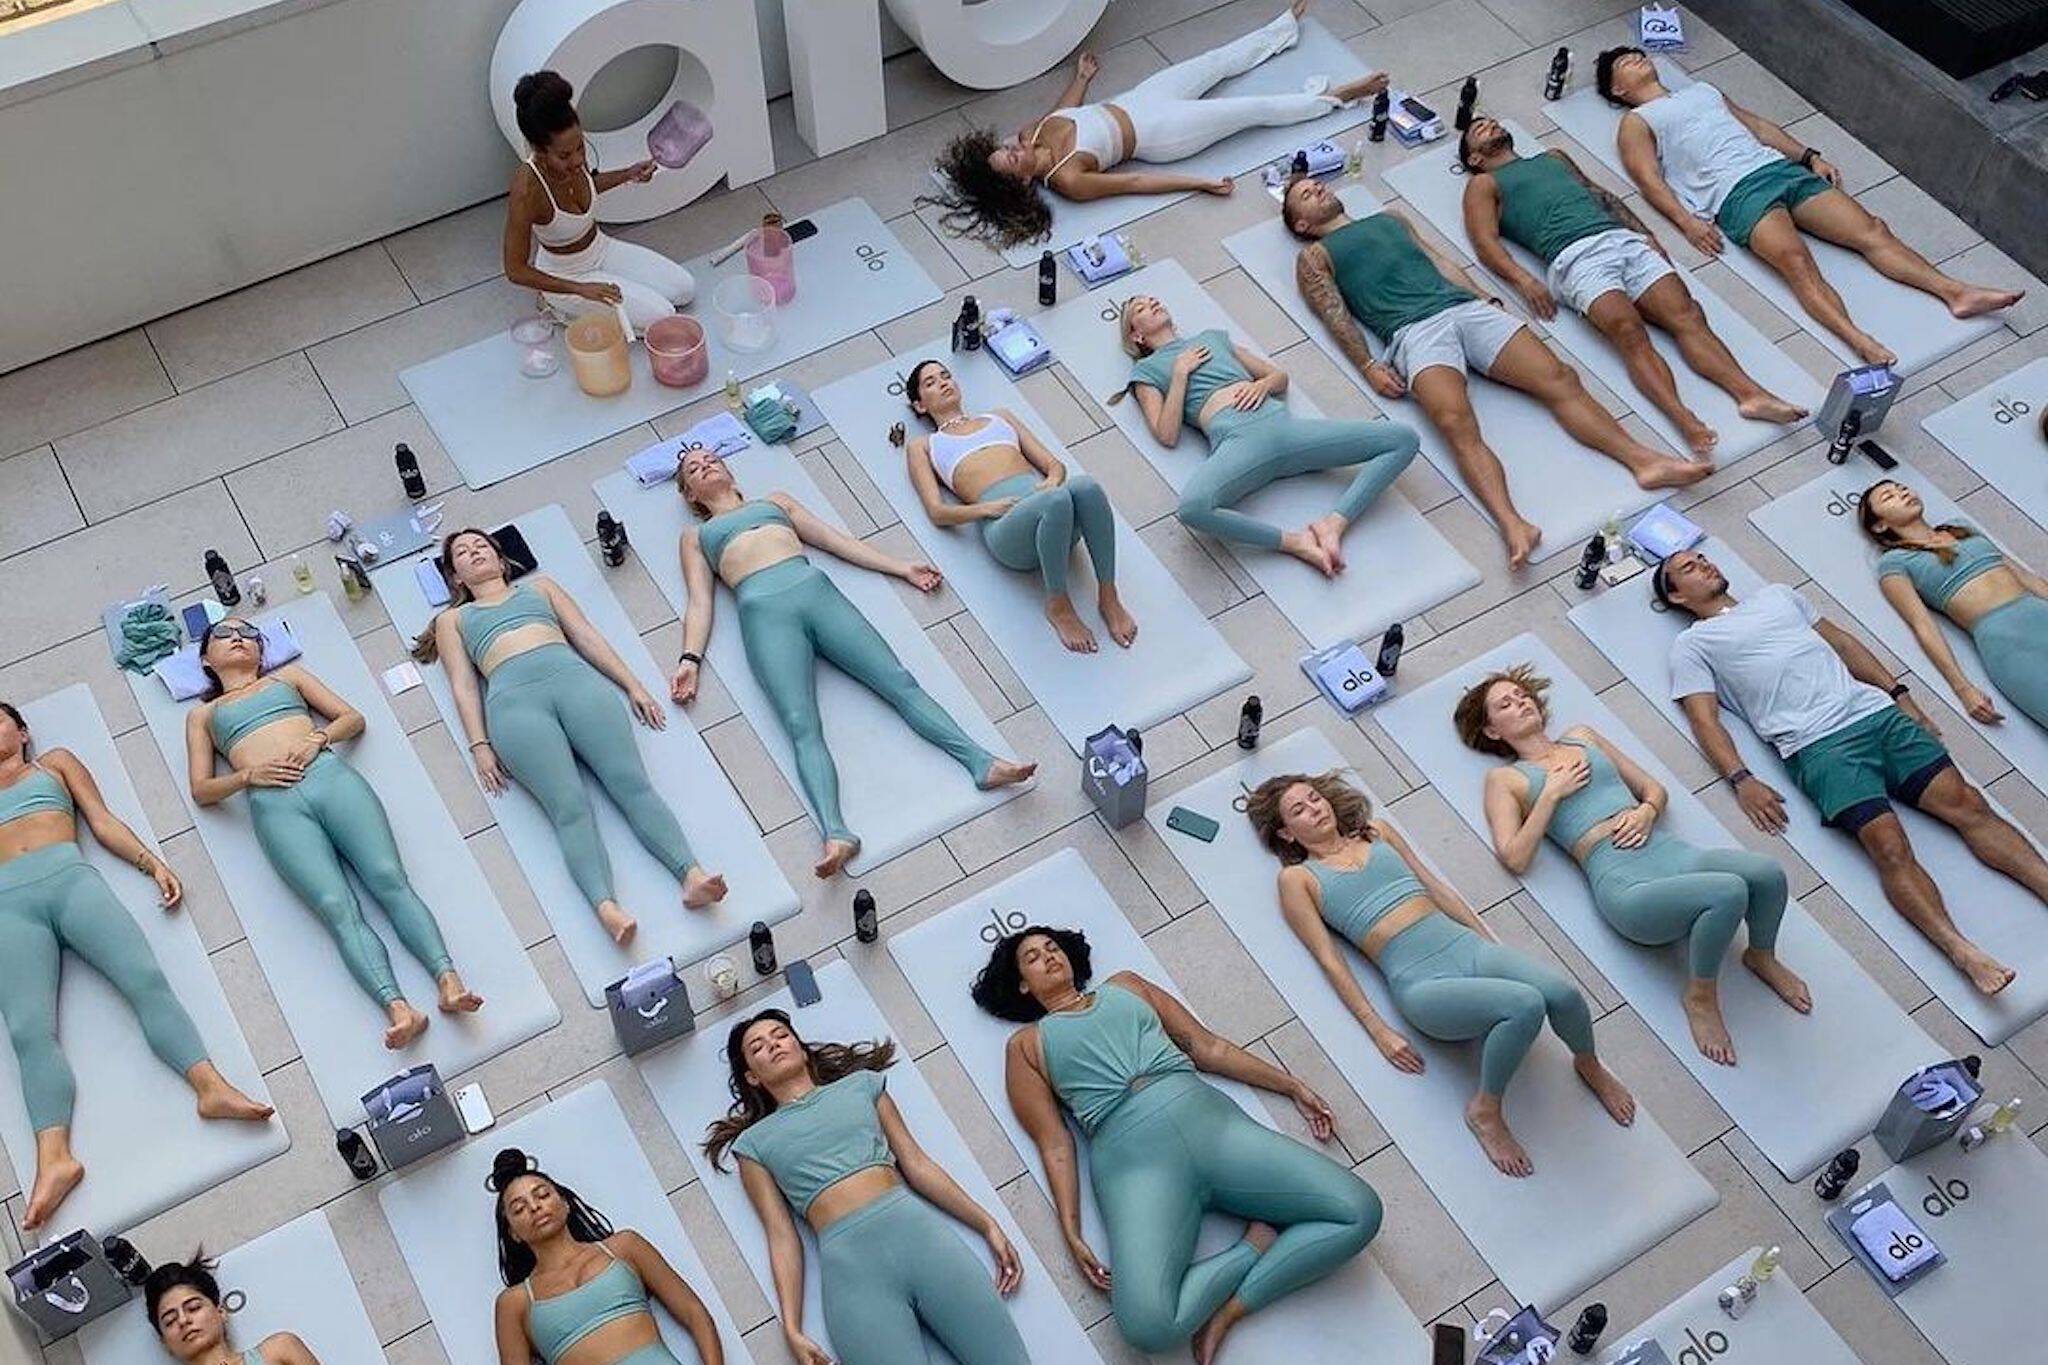 US-based yoga studio popular with celebrities opening first Toronto location